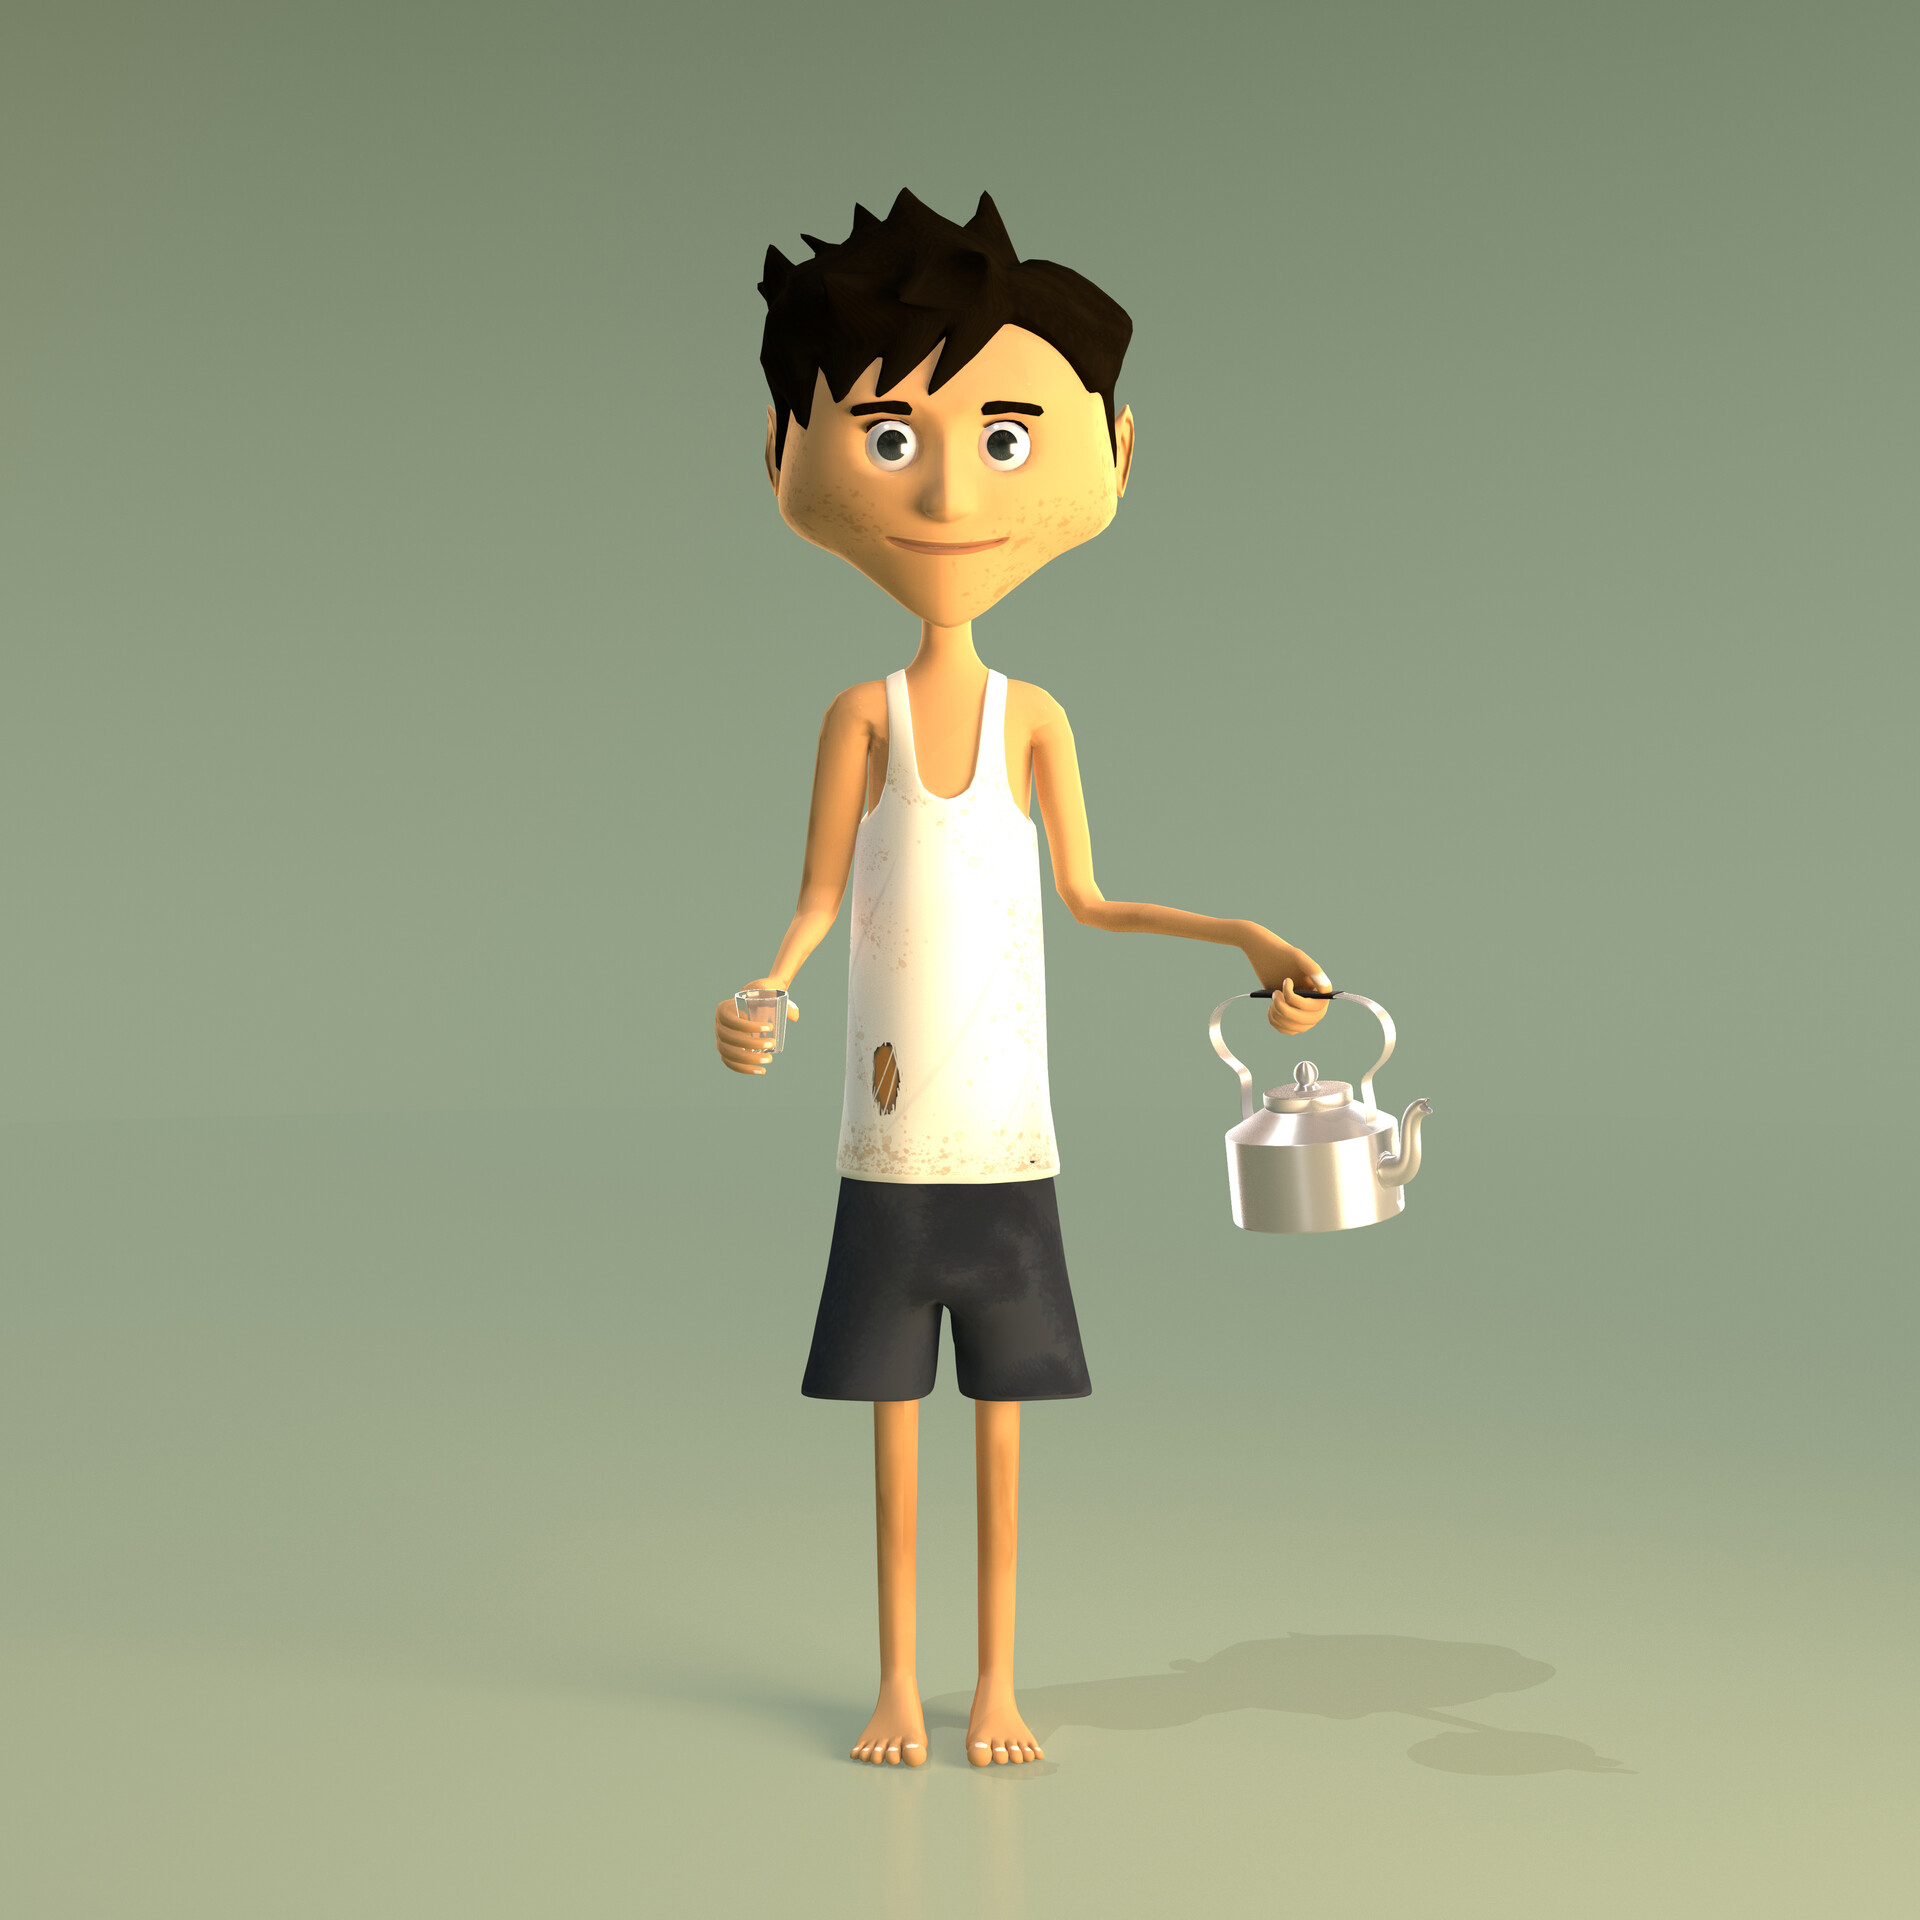 ArtStation - 3D Model of Cartoon Character Raju